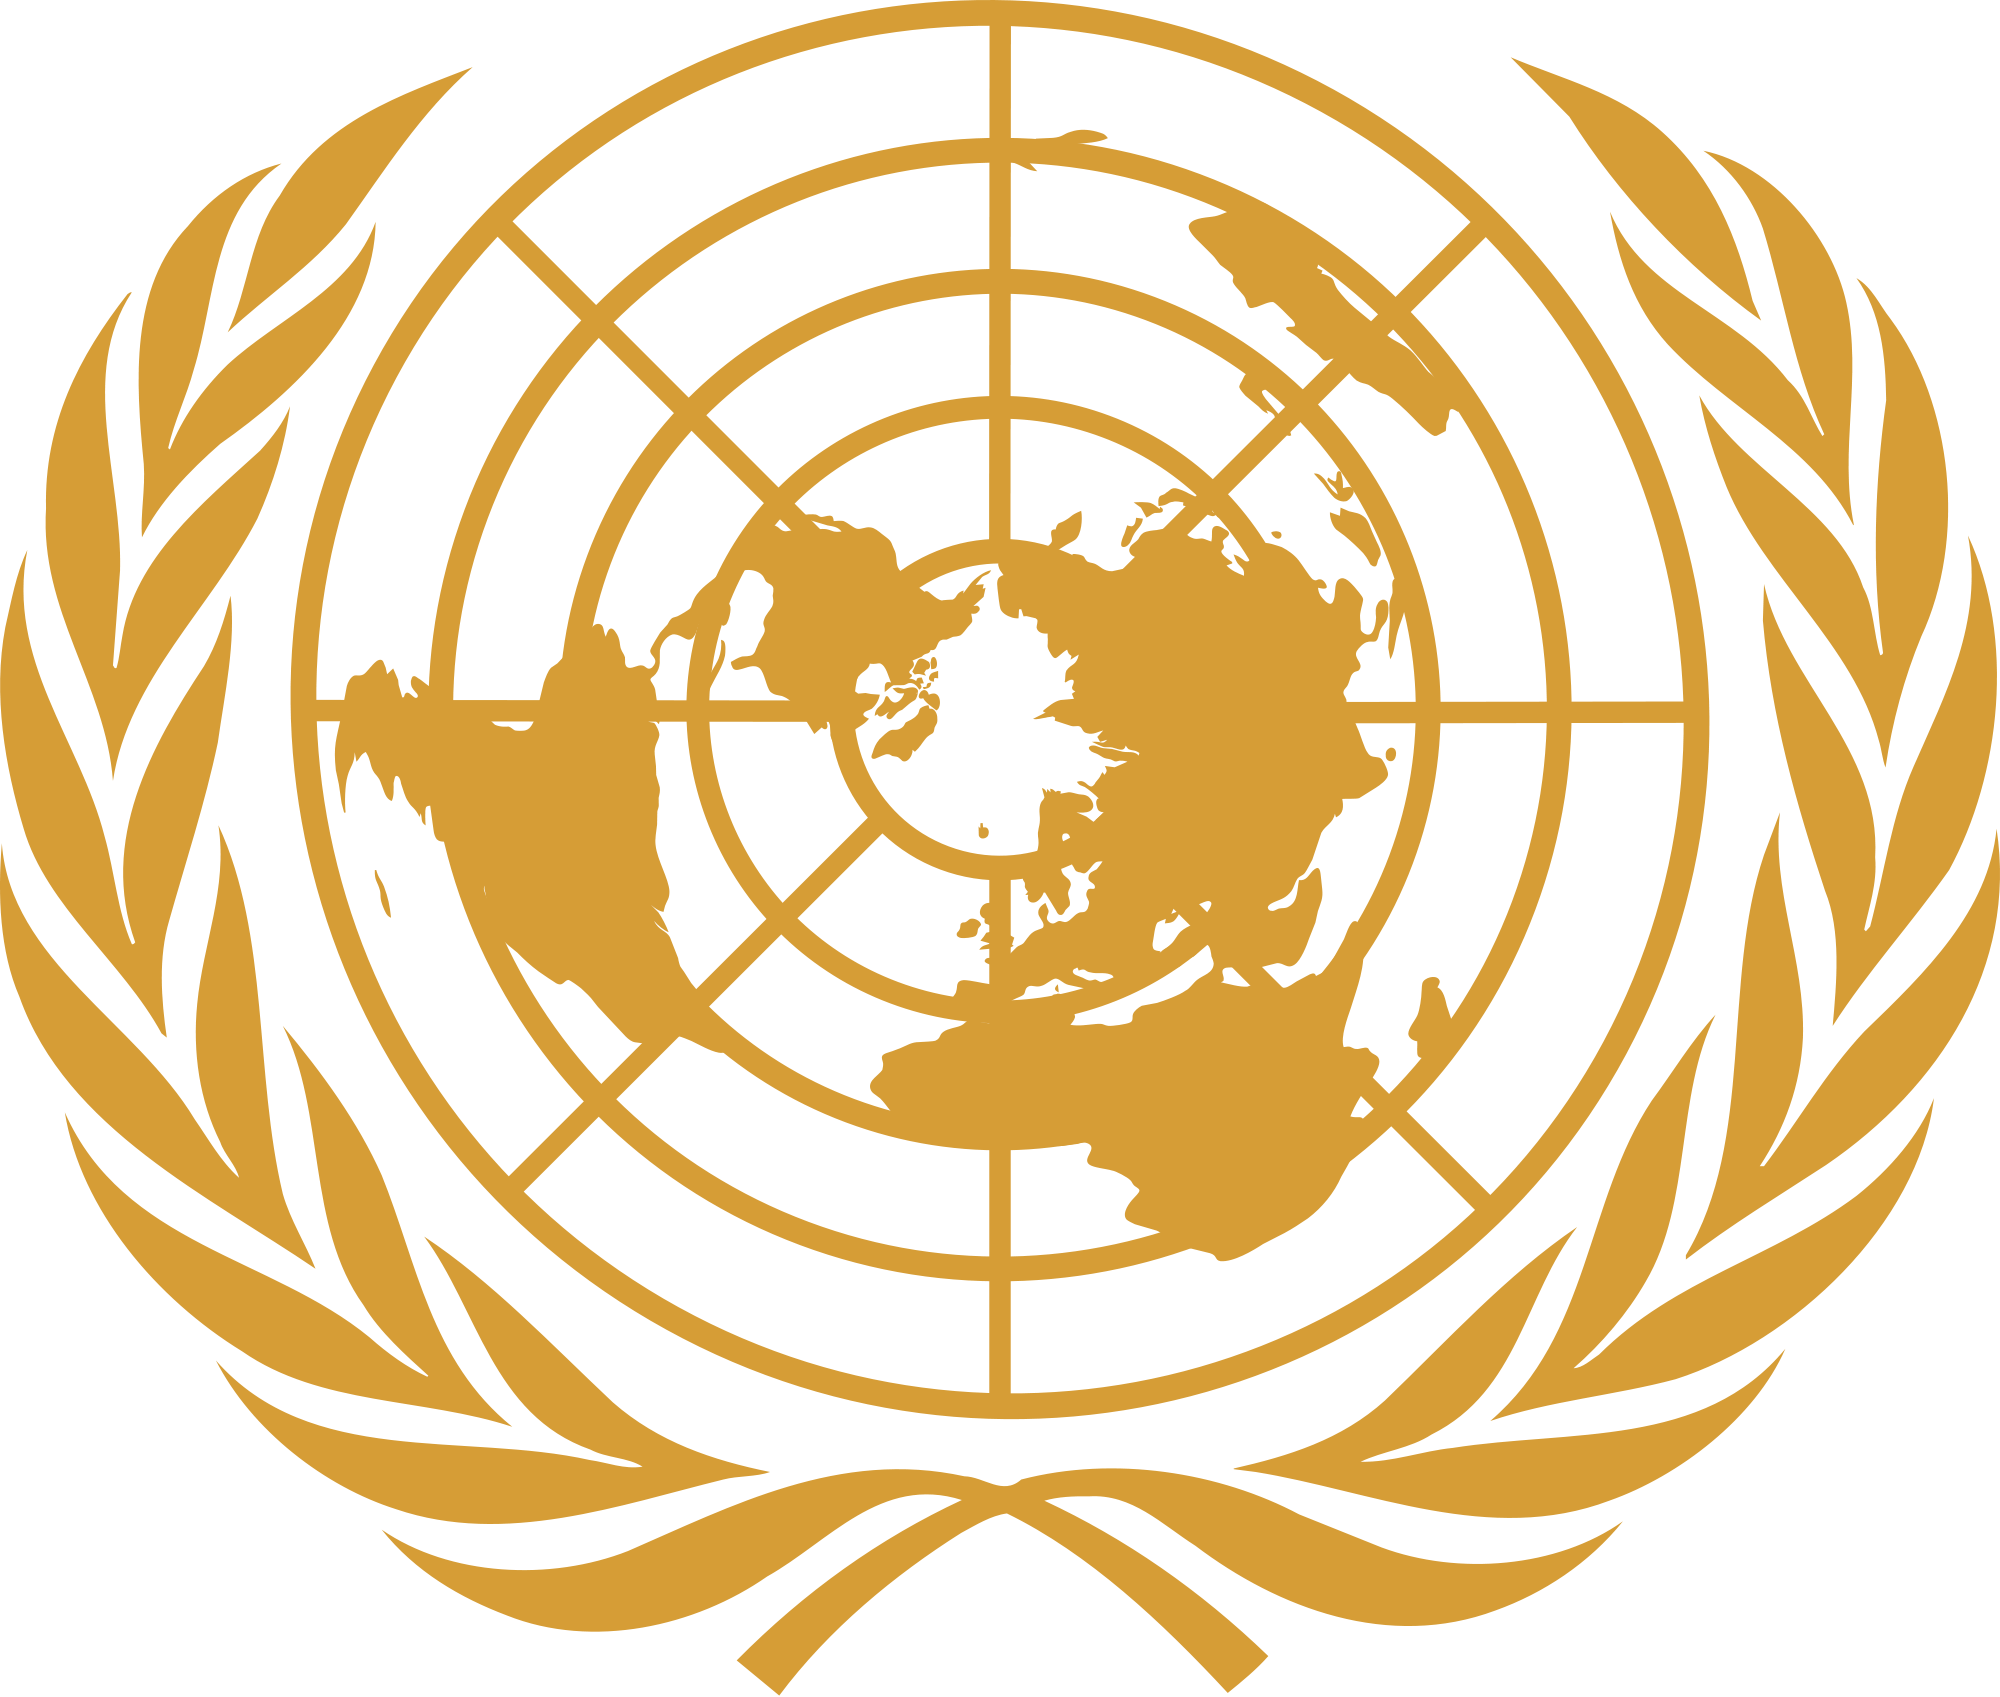 Orange and Gold Logo - File:UN emblem gold.svg - Wikimedia Commons